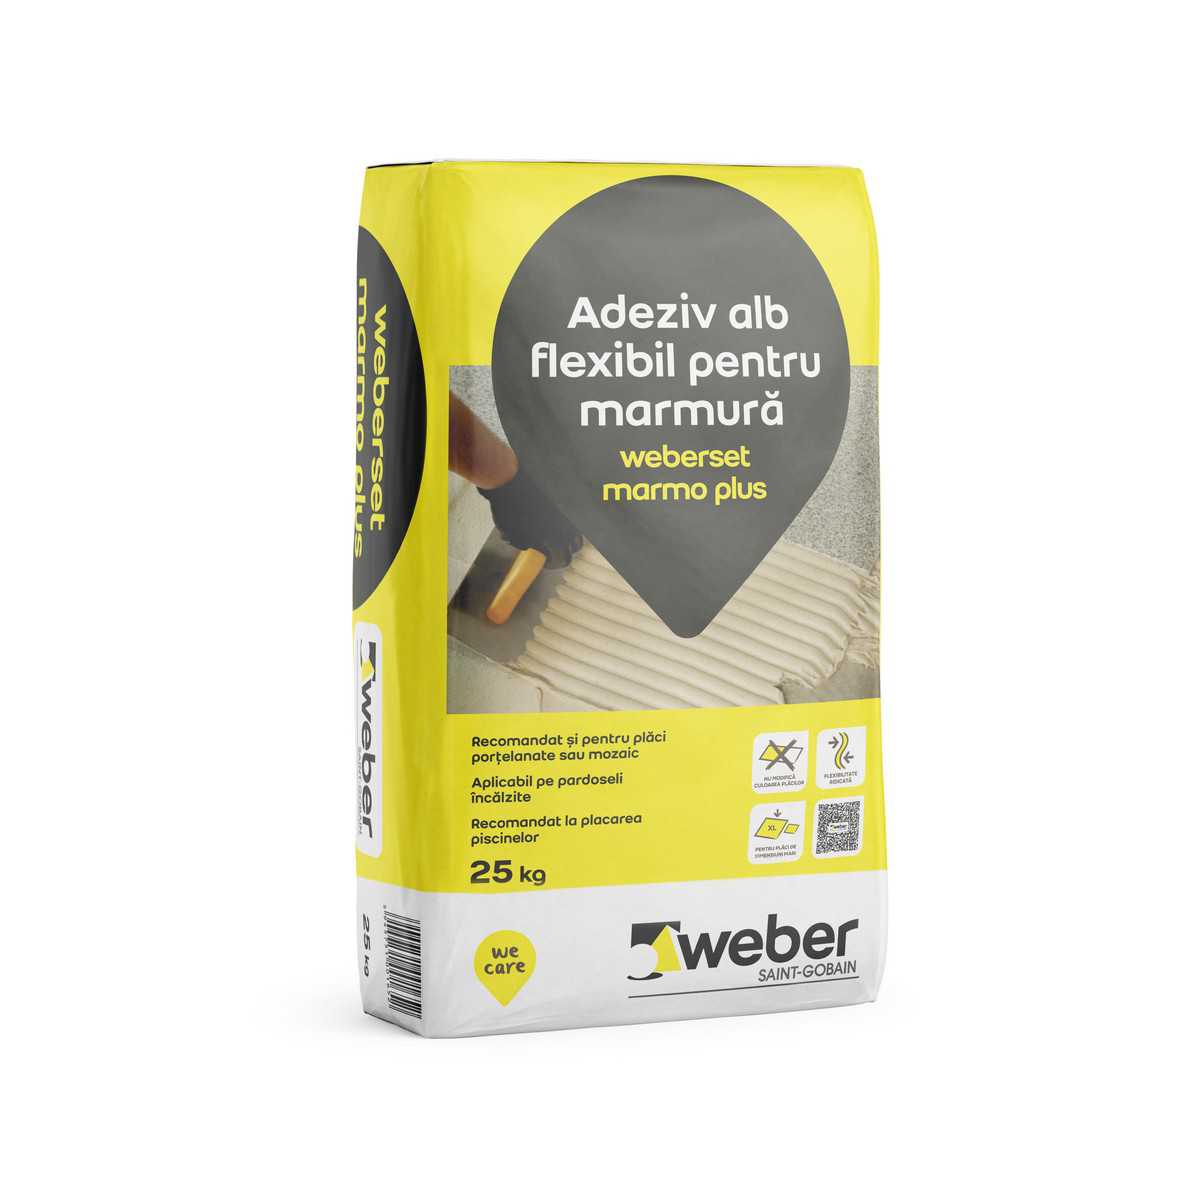 Adeziv flexibil marmura Weber Marmo Plus, alb, 25 kg